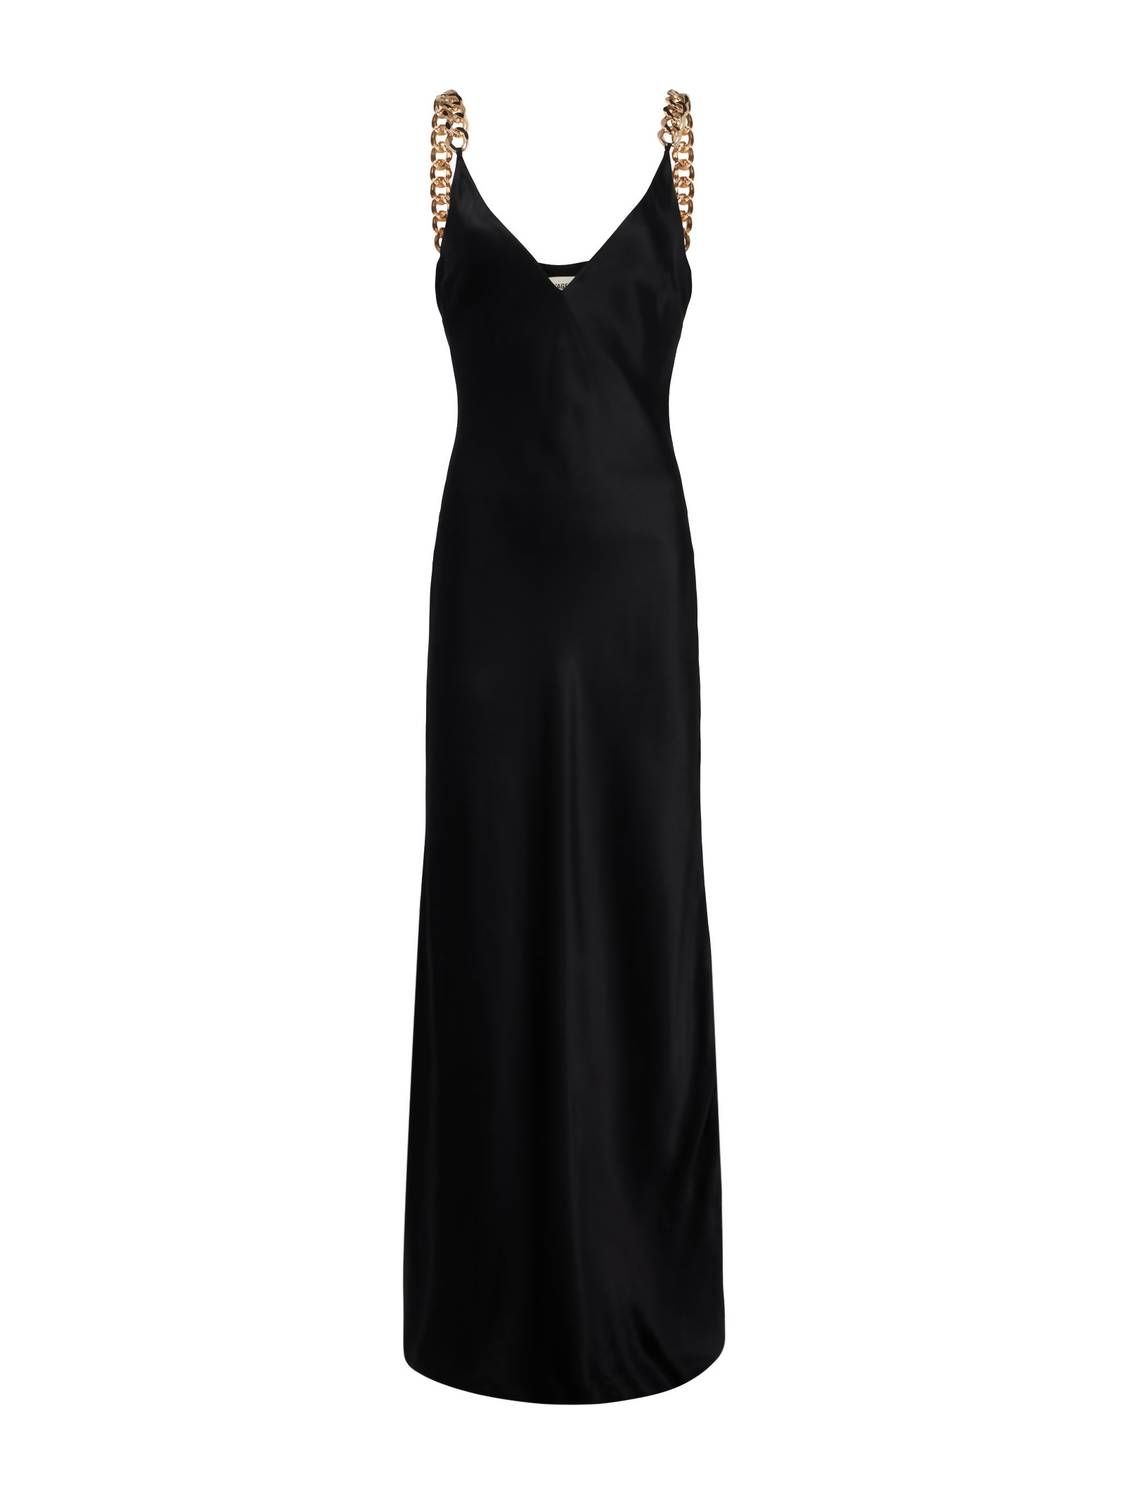 Style 1-1547655571-1901 L'Agence Size 6 Satin Black Side Slit Dress on Queenly